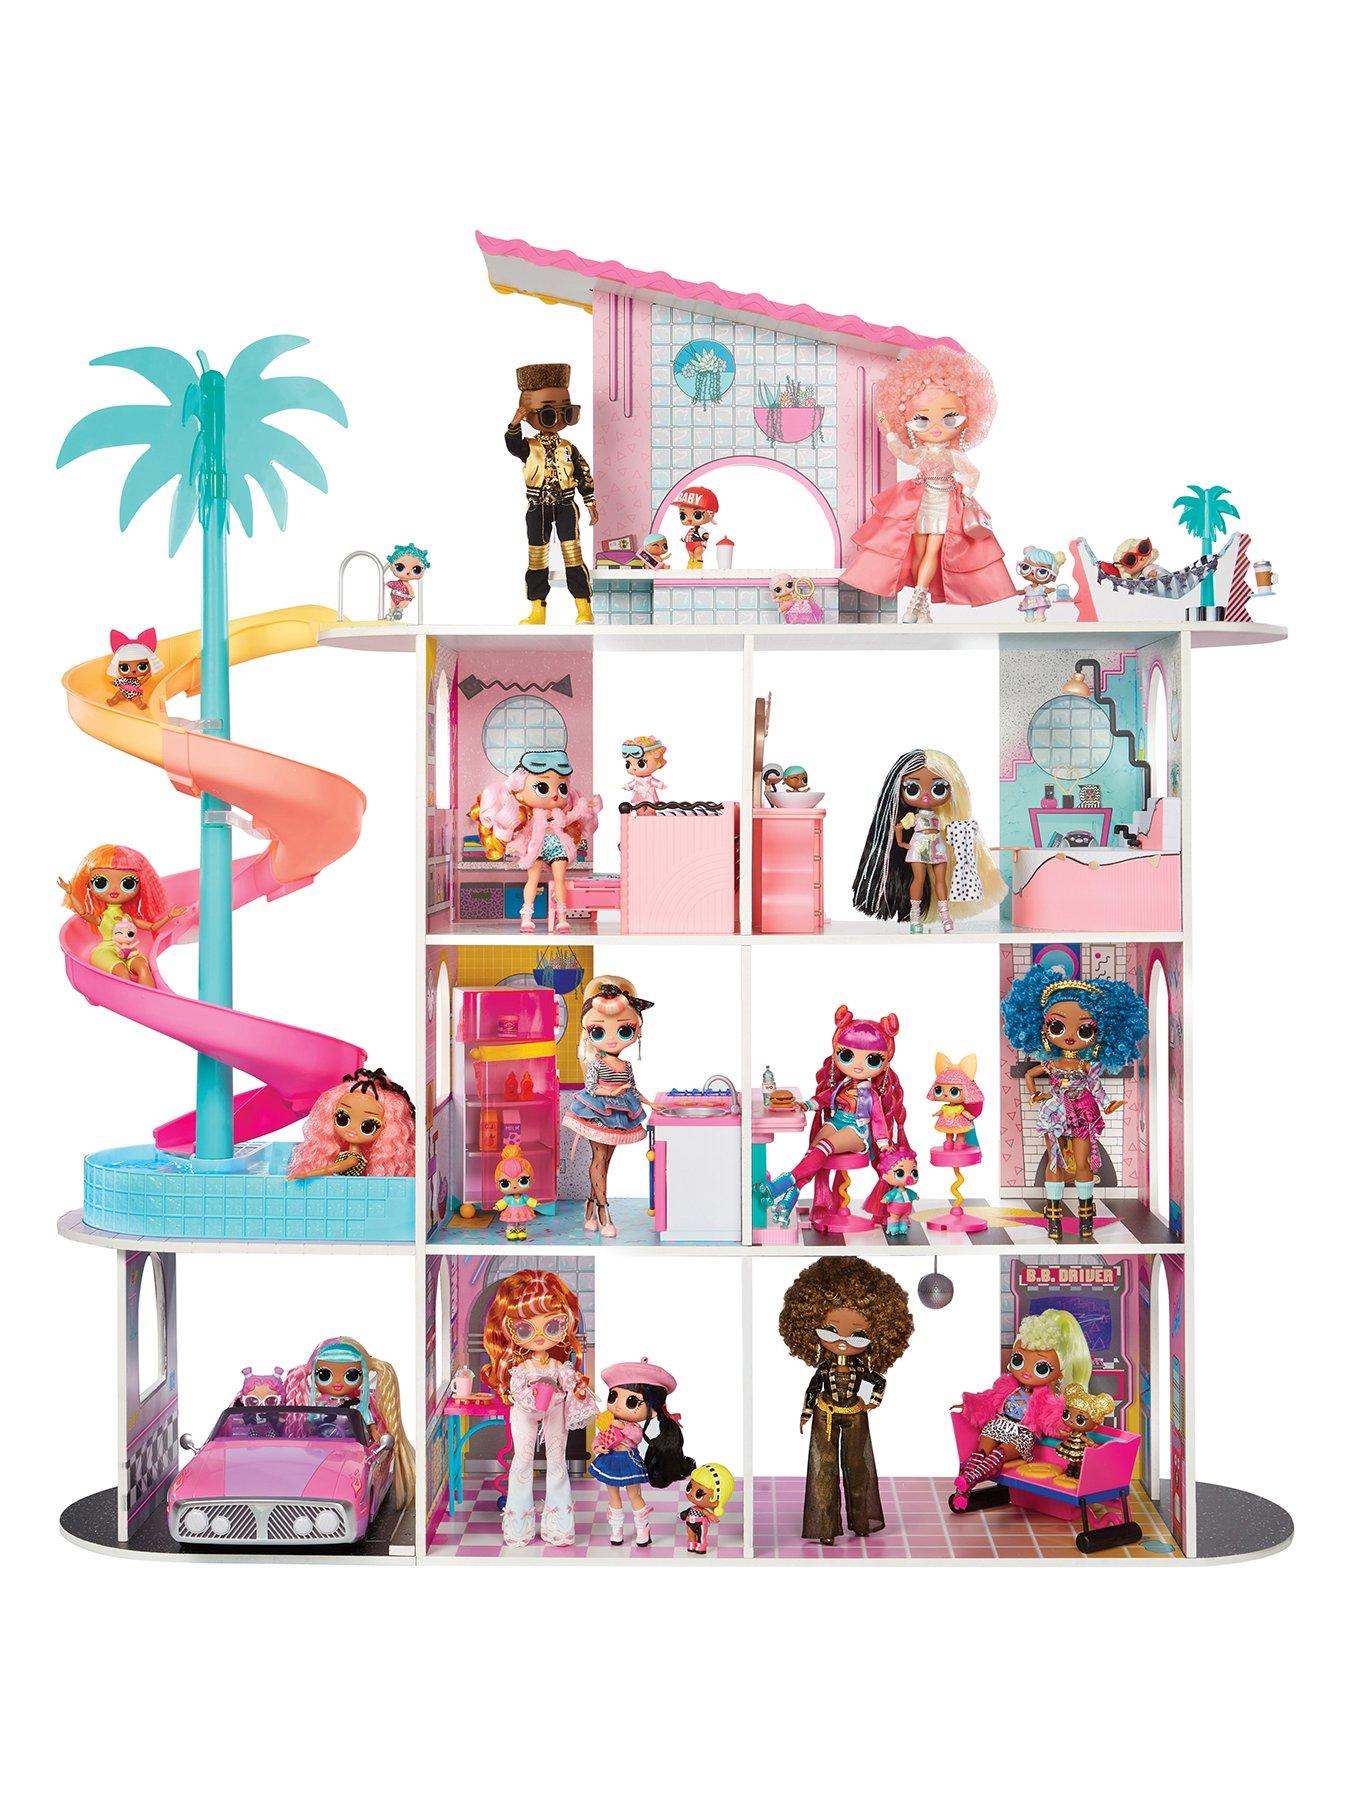 Free 2PCS dolls + Fairy Lights] SALE Big Dollhouse Multiple Floors Girls  Kids Dream Barbie Doll House with Simulation Furnitures Set Castle toy Barbie  house doll house princessDIY Dollhouse Miniature Furniture Kit